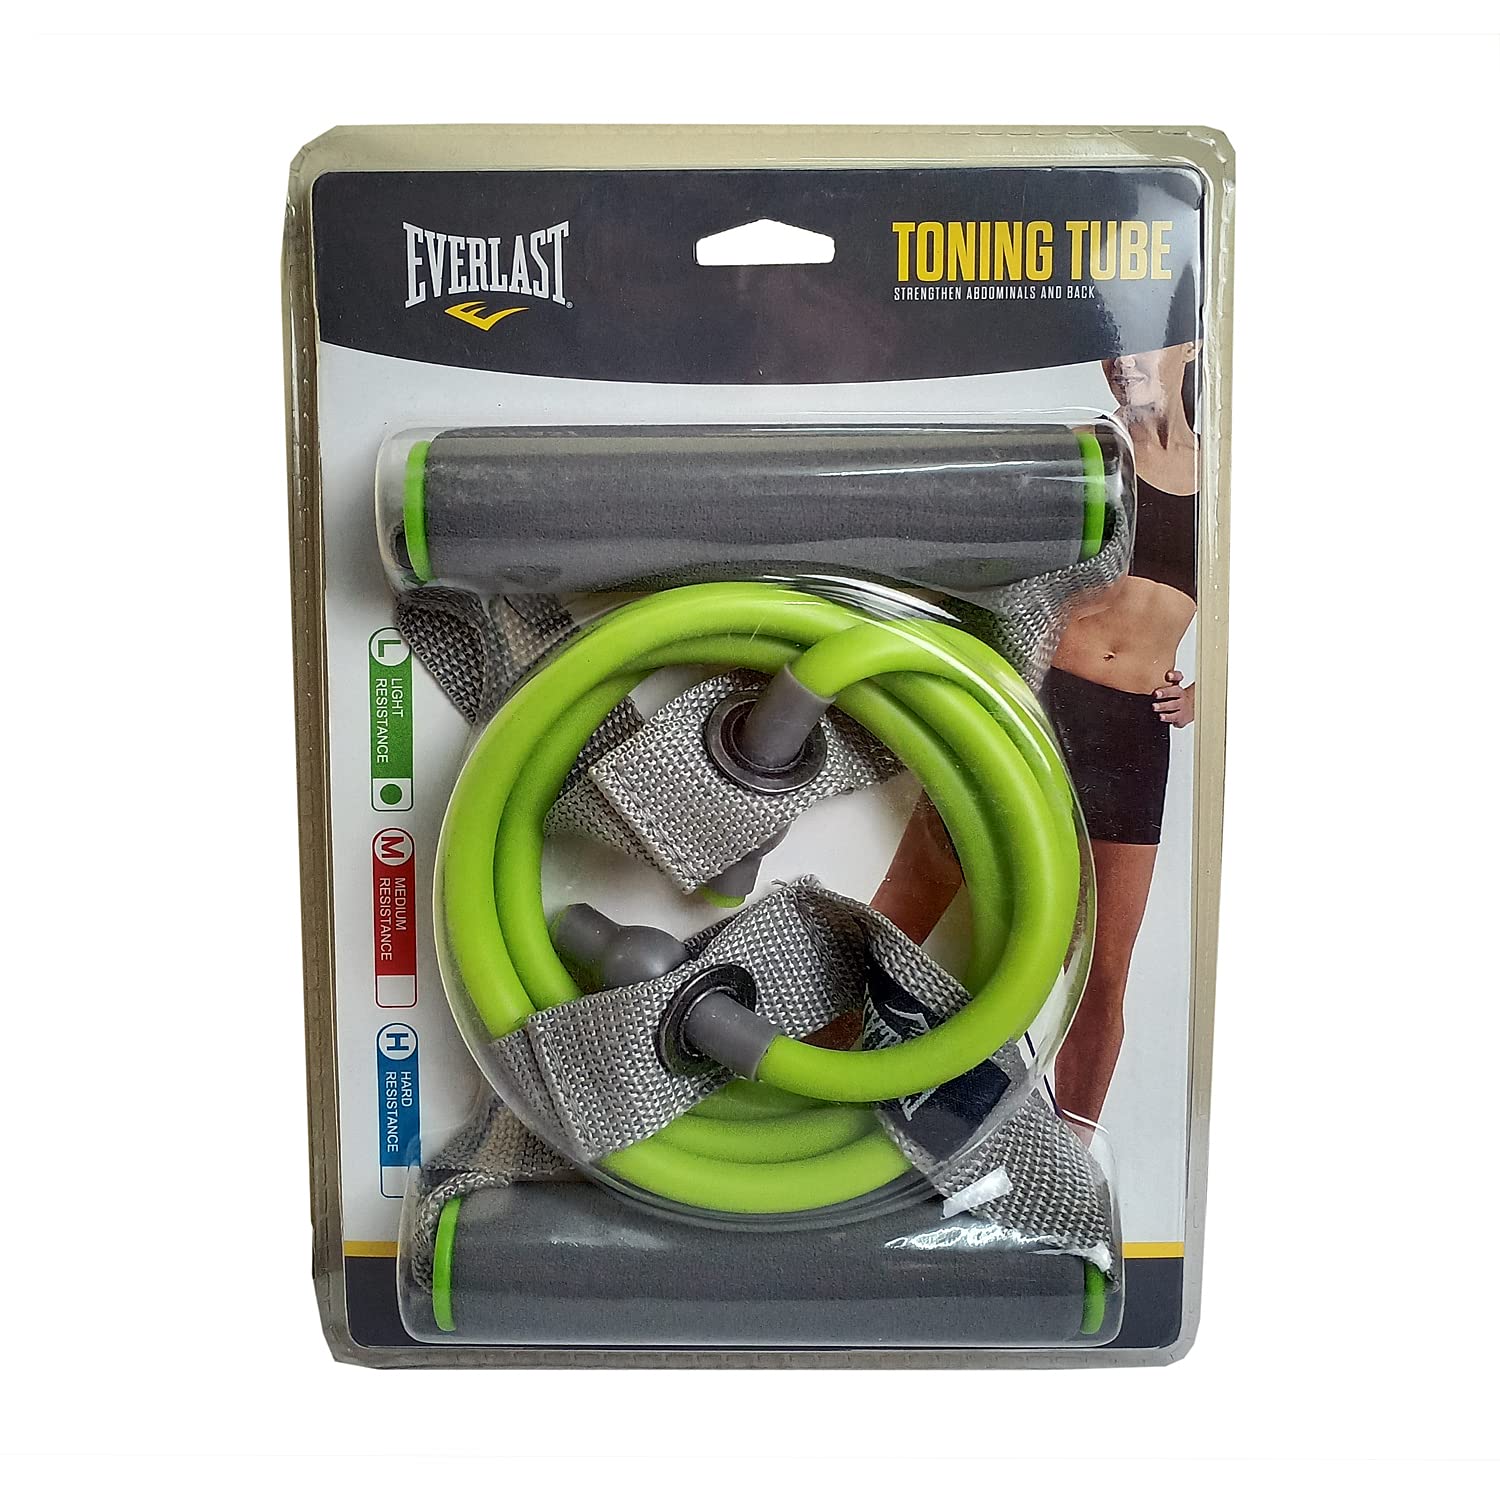 Everlast ELDOM028 Toning Tube Light Resistance , Green - Best Price online Prokicksports.com